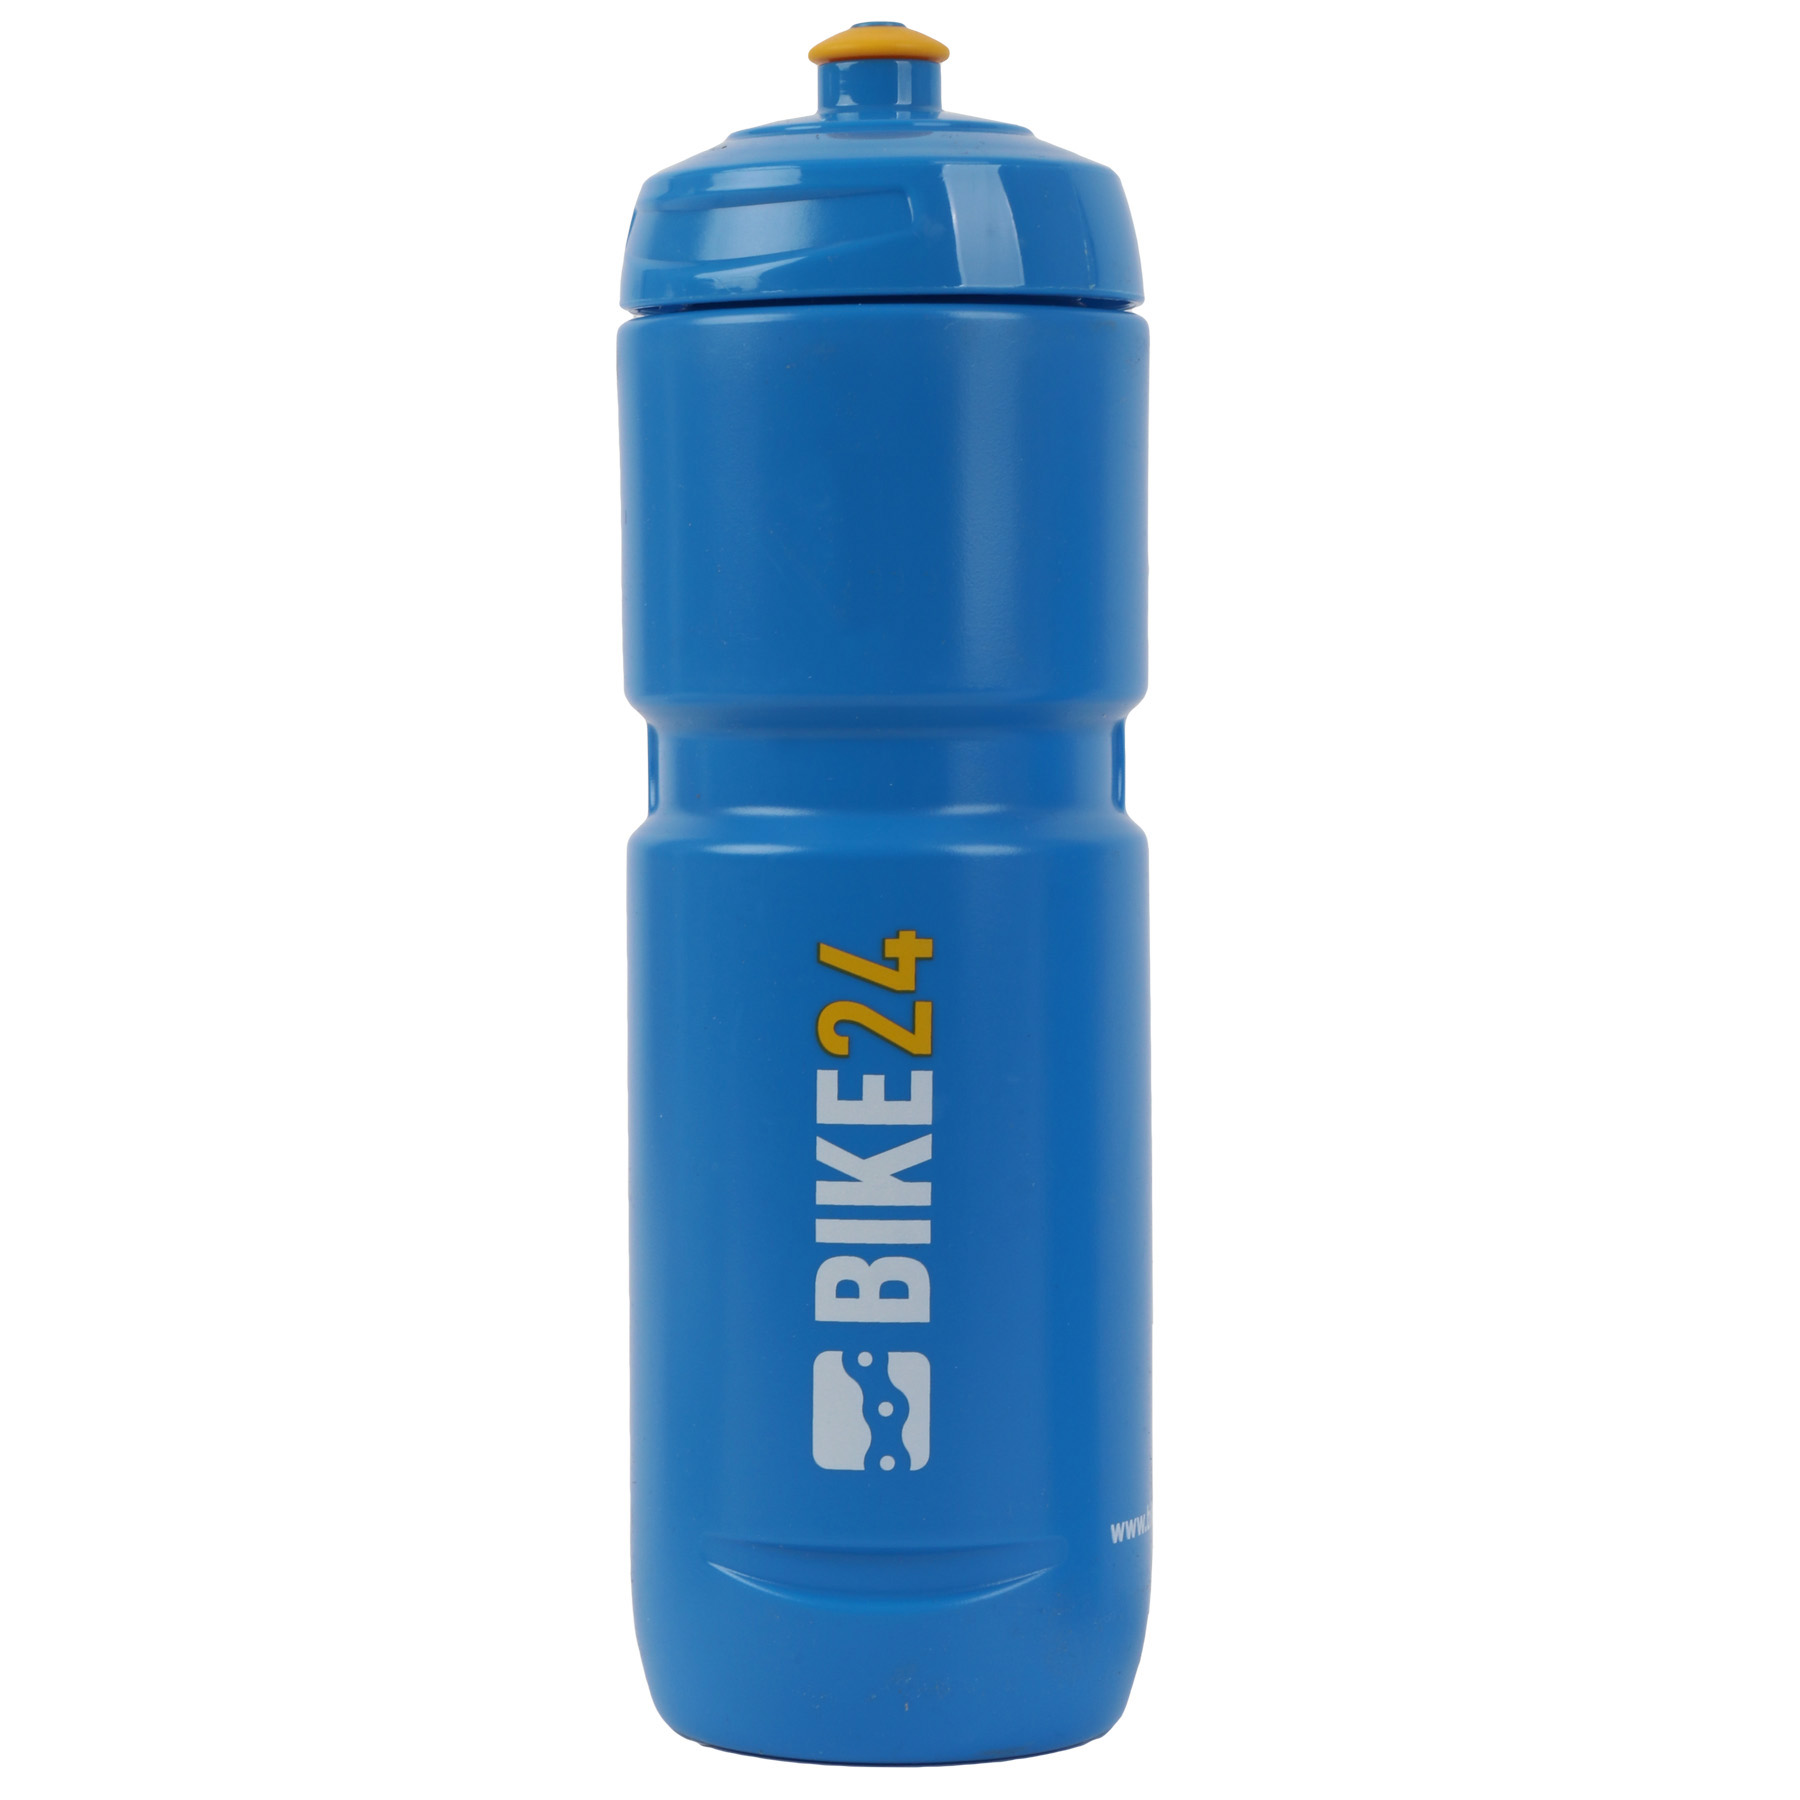 Productfoto van Elite BIKE24 Super Loli Bike Bottle 800ml - blue